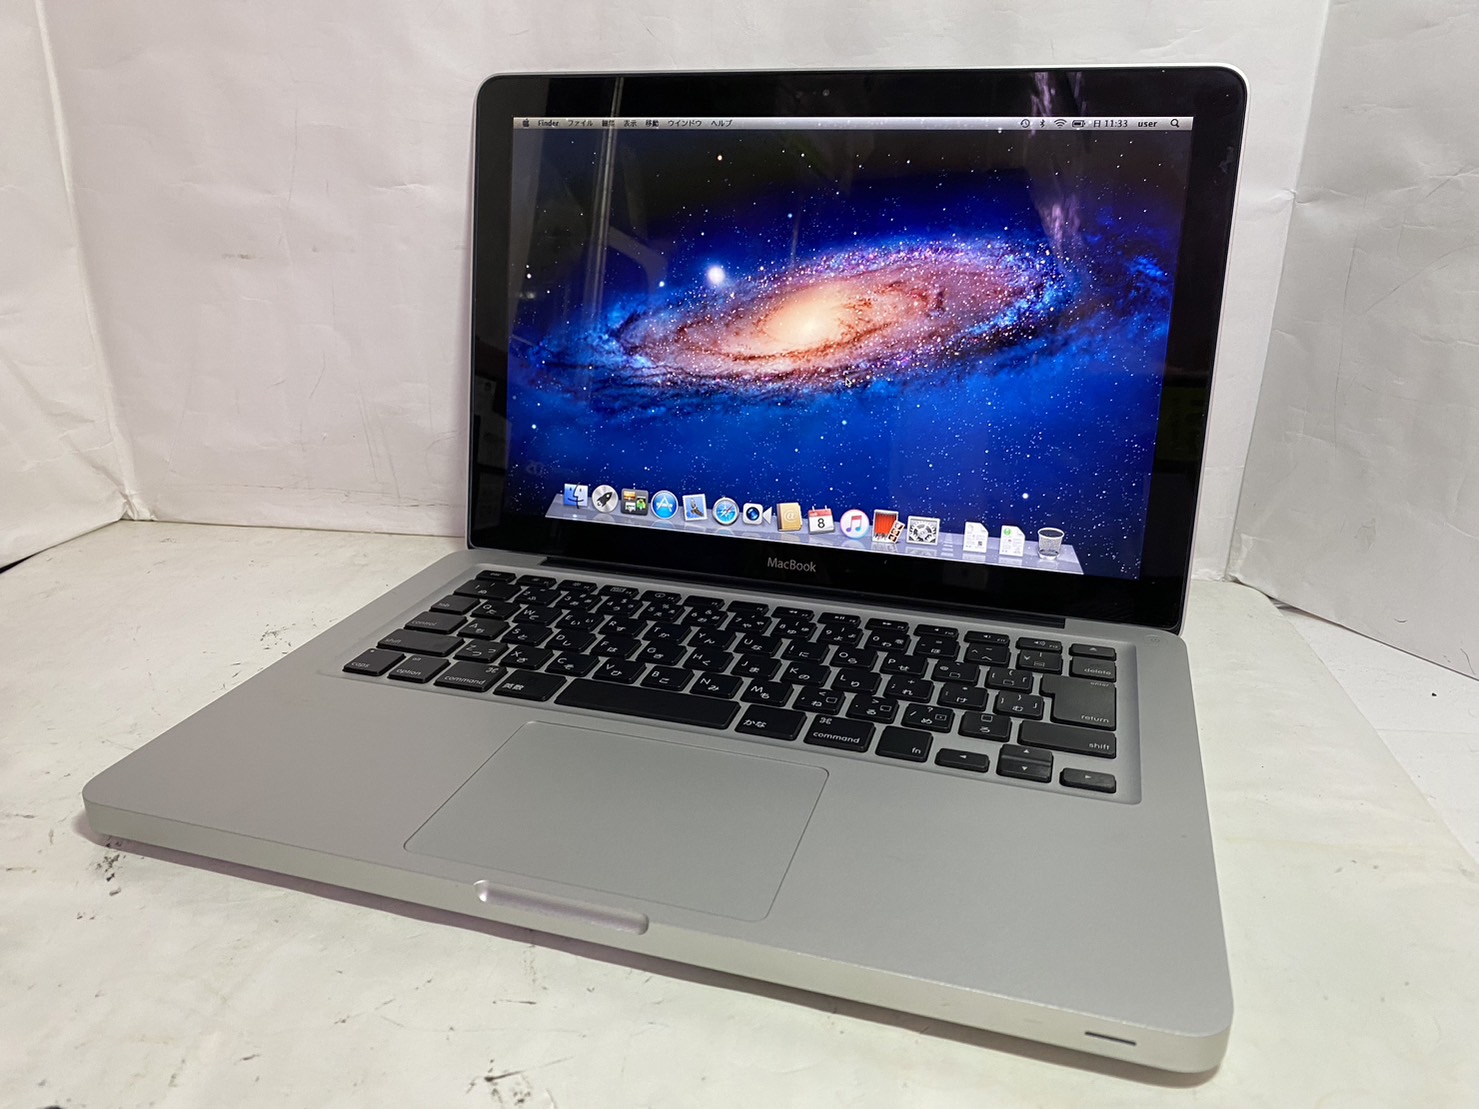 APPLE(アップル) MacBook Pro (13-inch, Mid 2008) A1278の激安通販